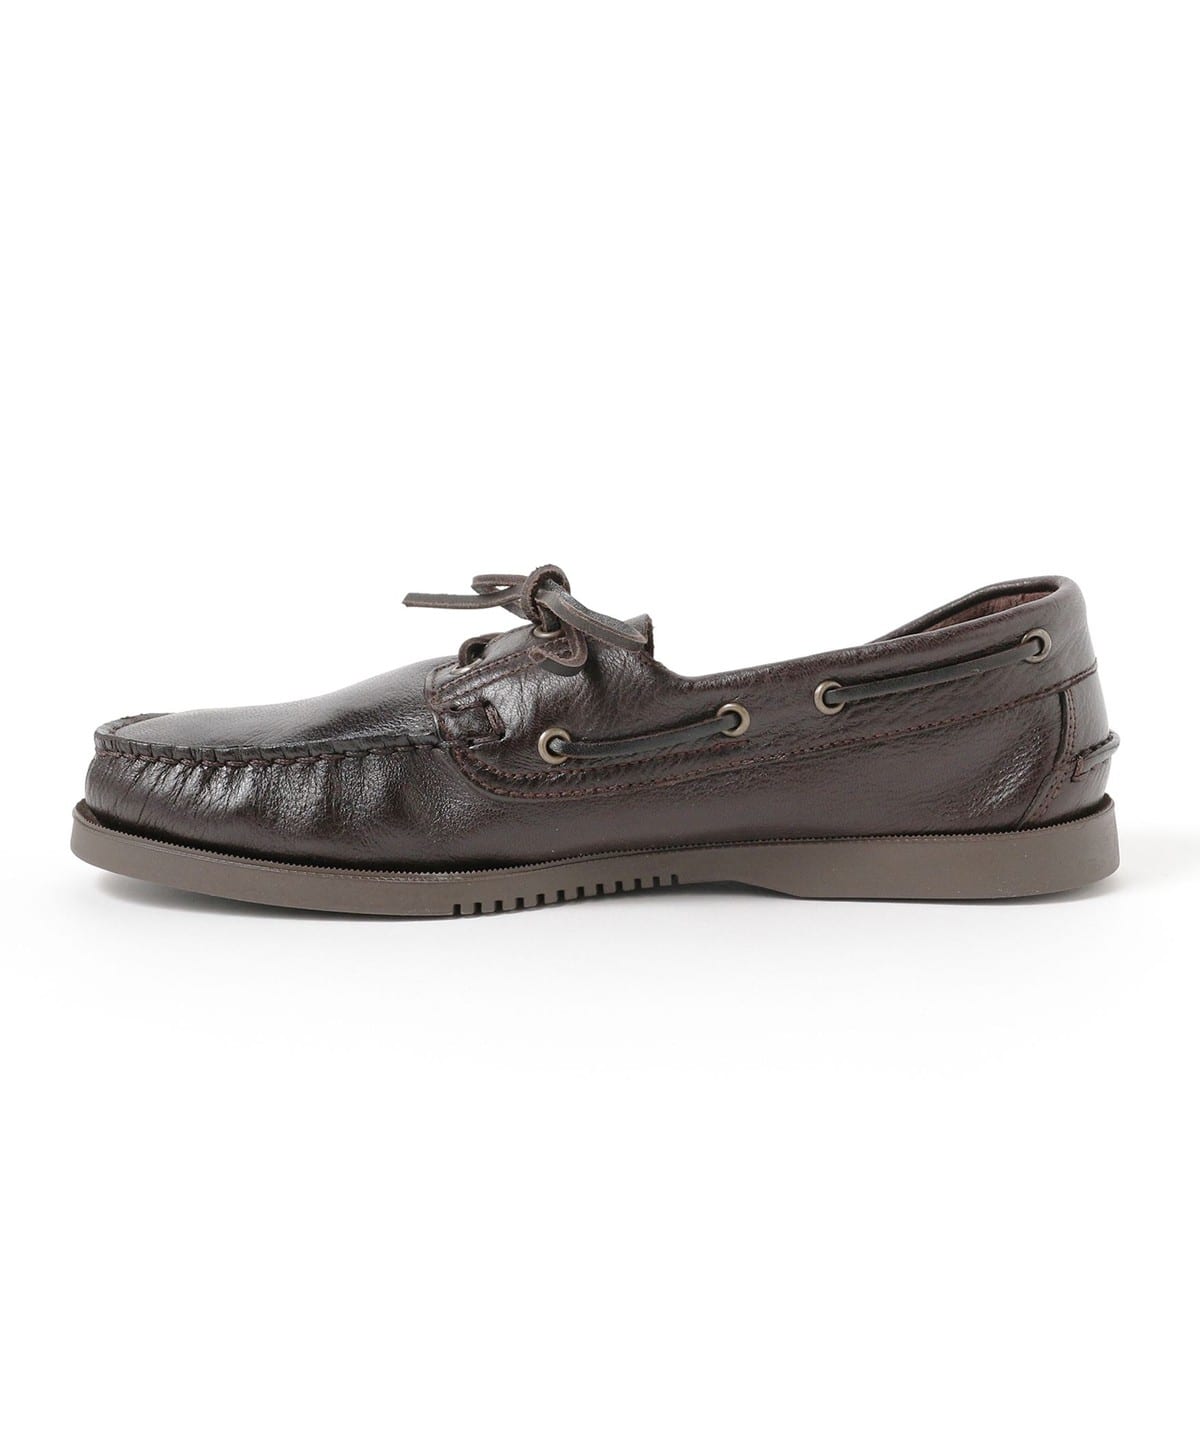 BEAMS F BEAMS / BARTH deerskin deck shoes (shoes leather Paraboot